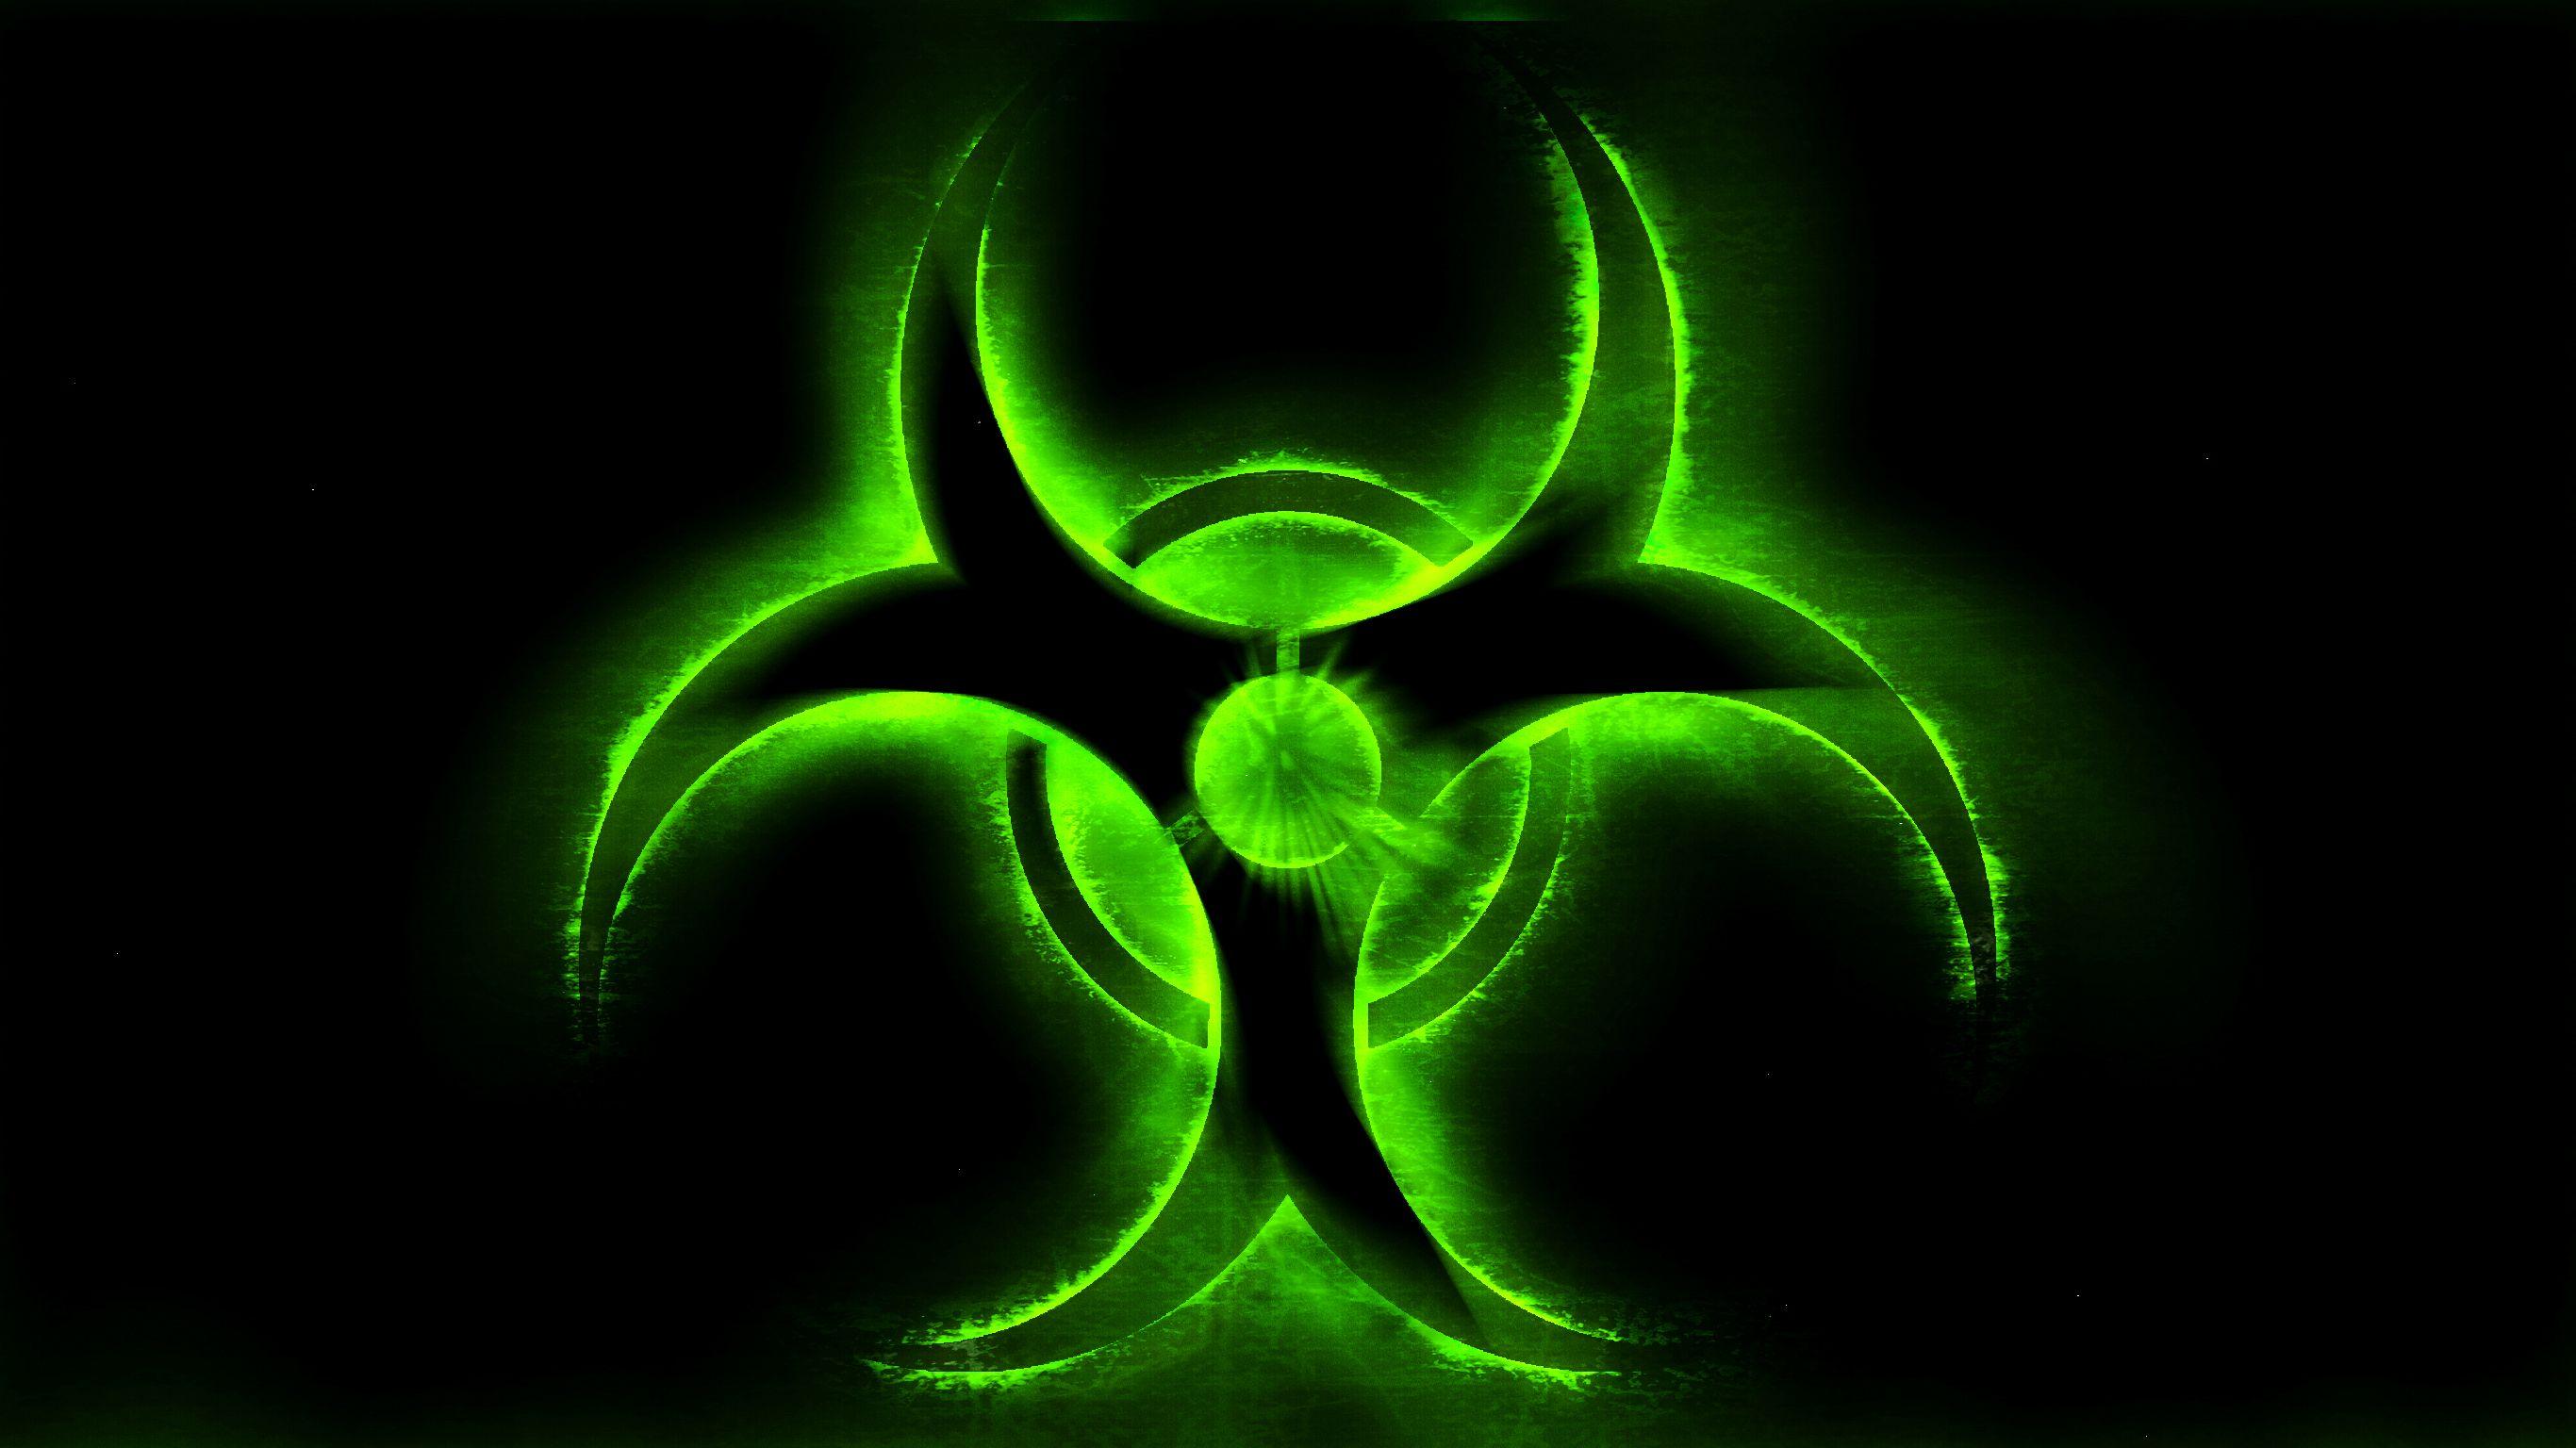 Cool Toxic Logo - Toxic Symbol Wallpaper - WallpaperSafari